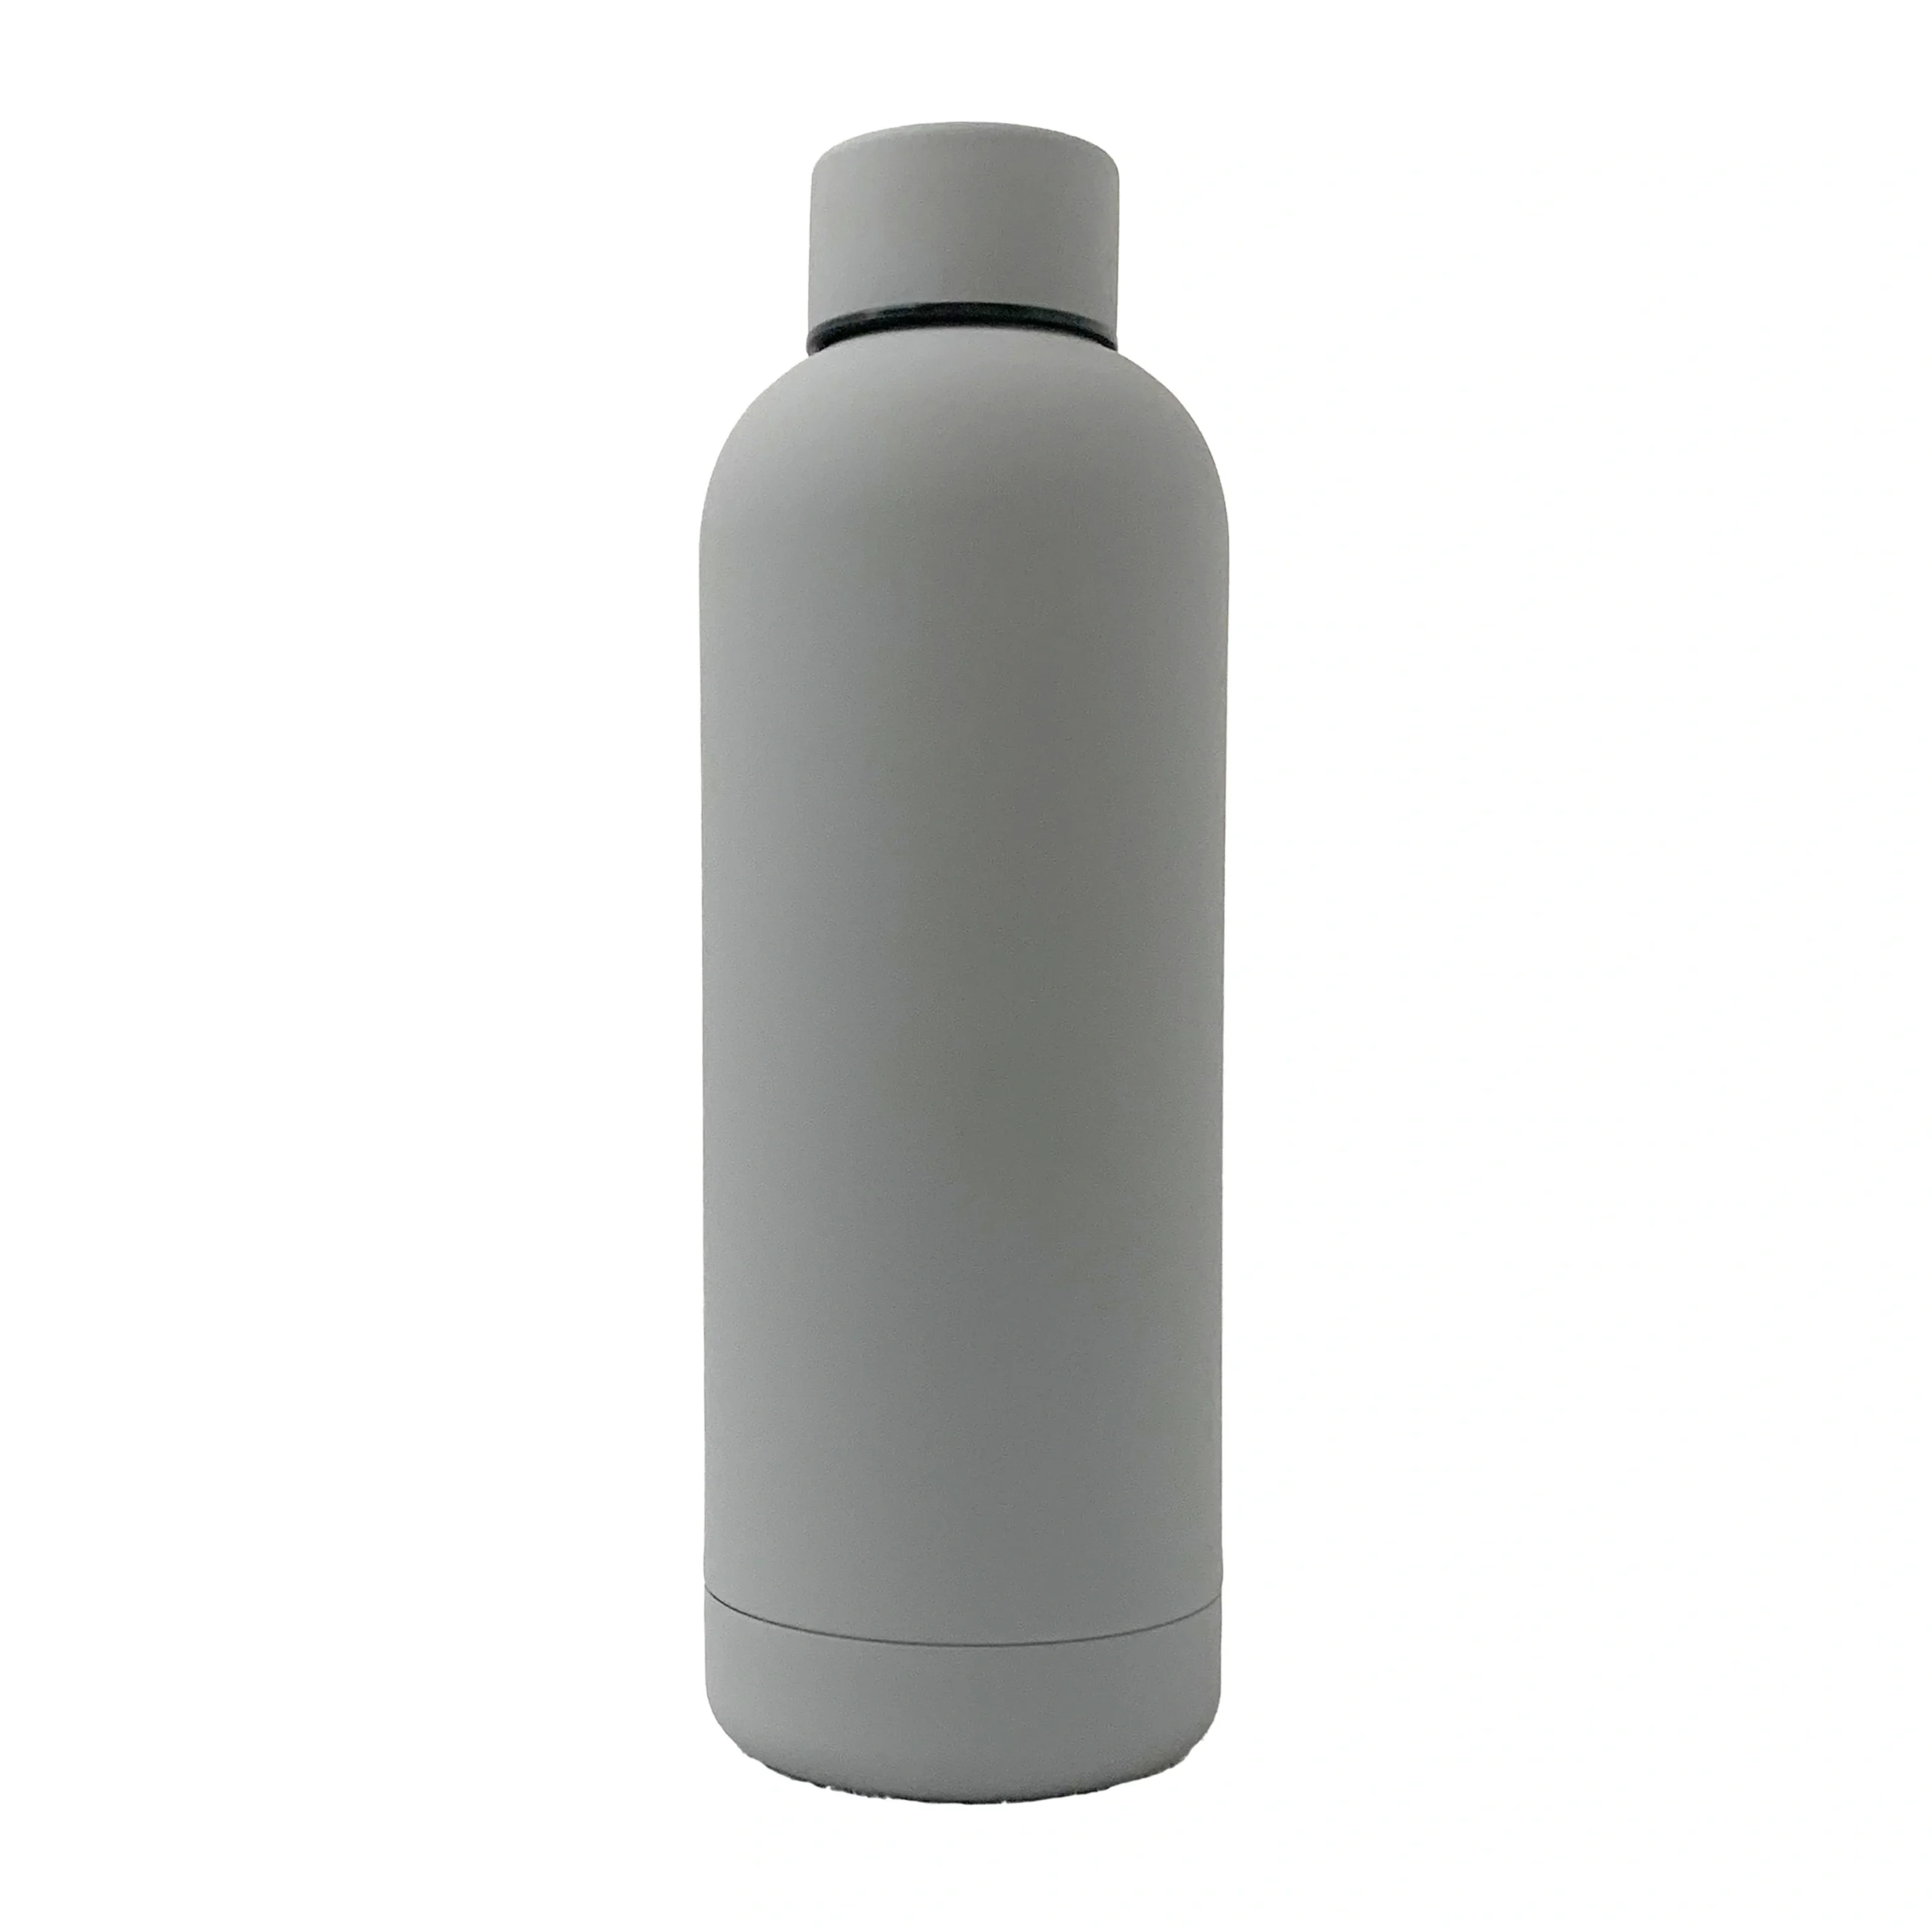 https://theceocreative.com/wp-content/uploads/2023/01/17oz-rubber-bottle-gray-scaled.webp